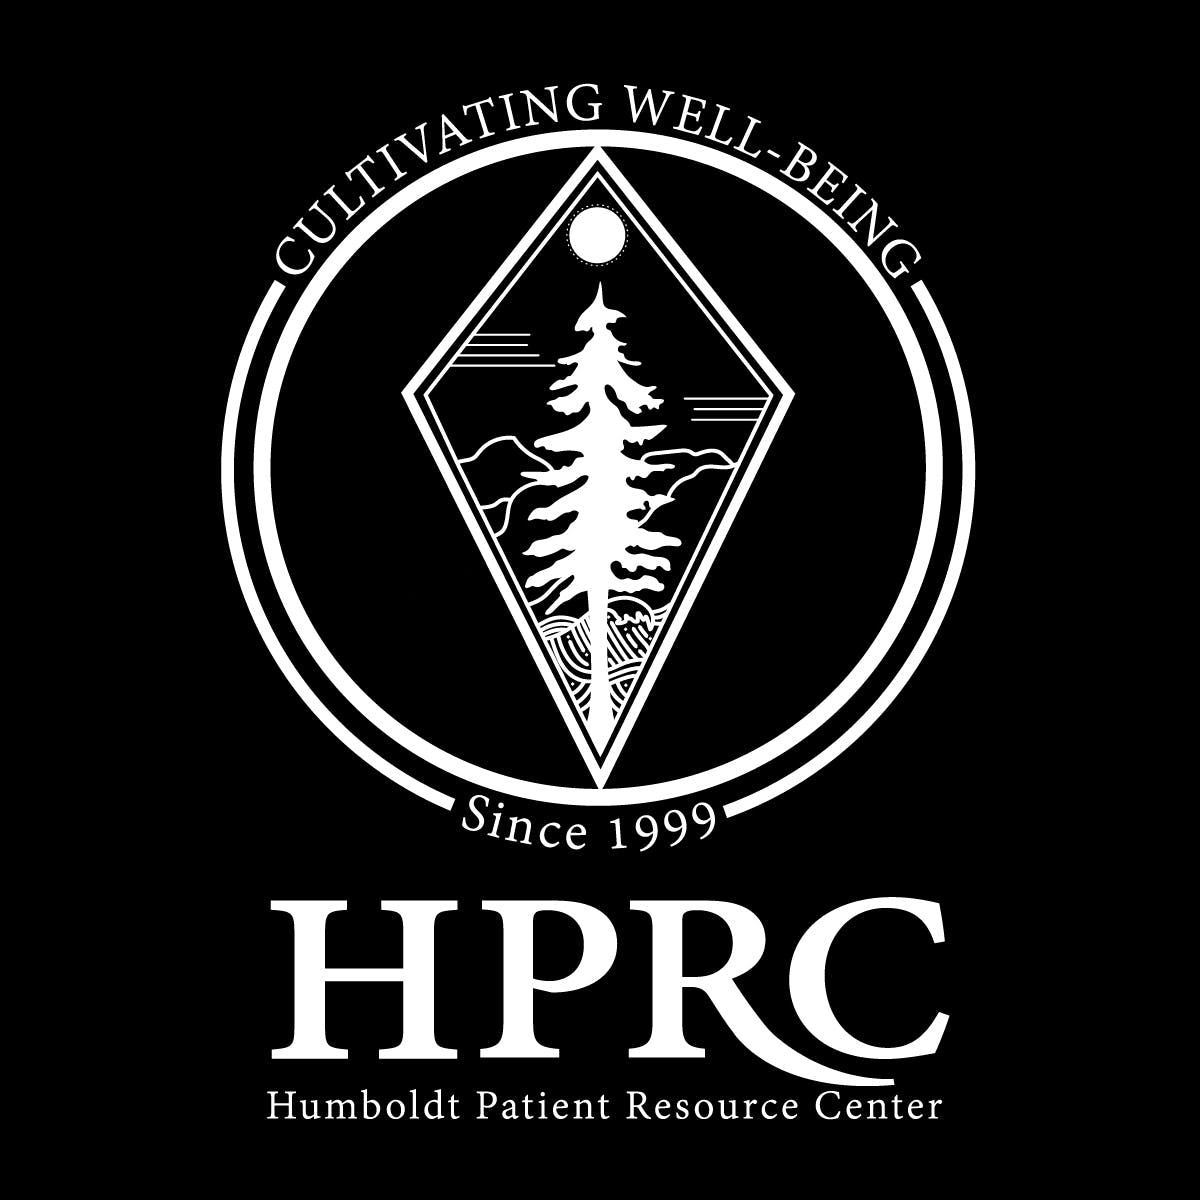 Humboldt Patient Resource Center HPRC - Medical Marijuana Doctors - Cannabizme.com